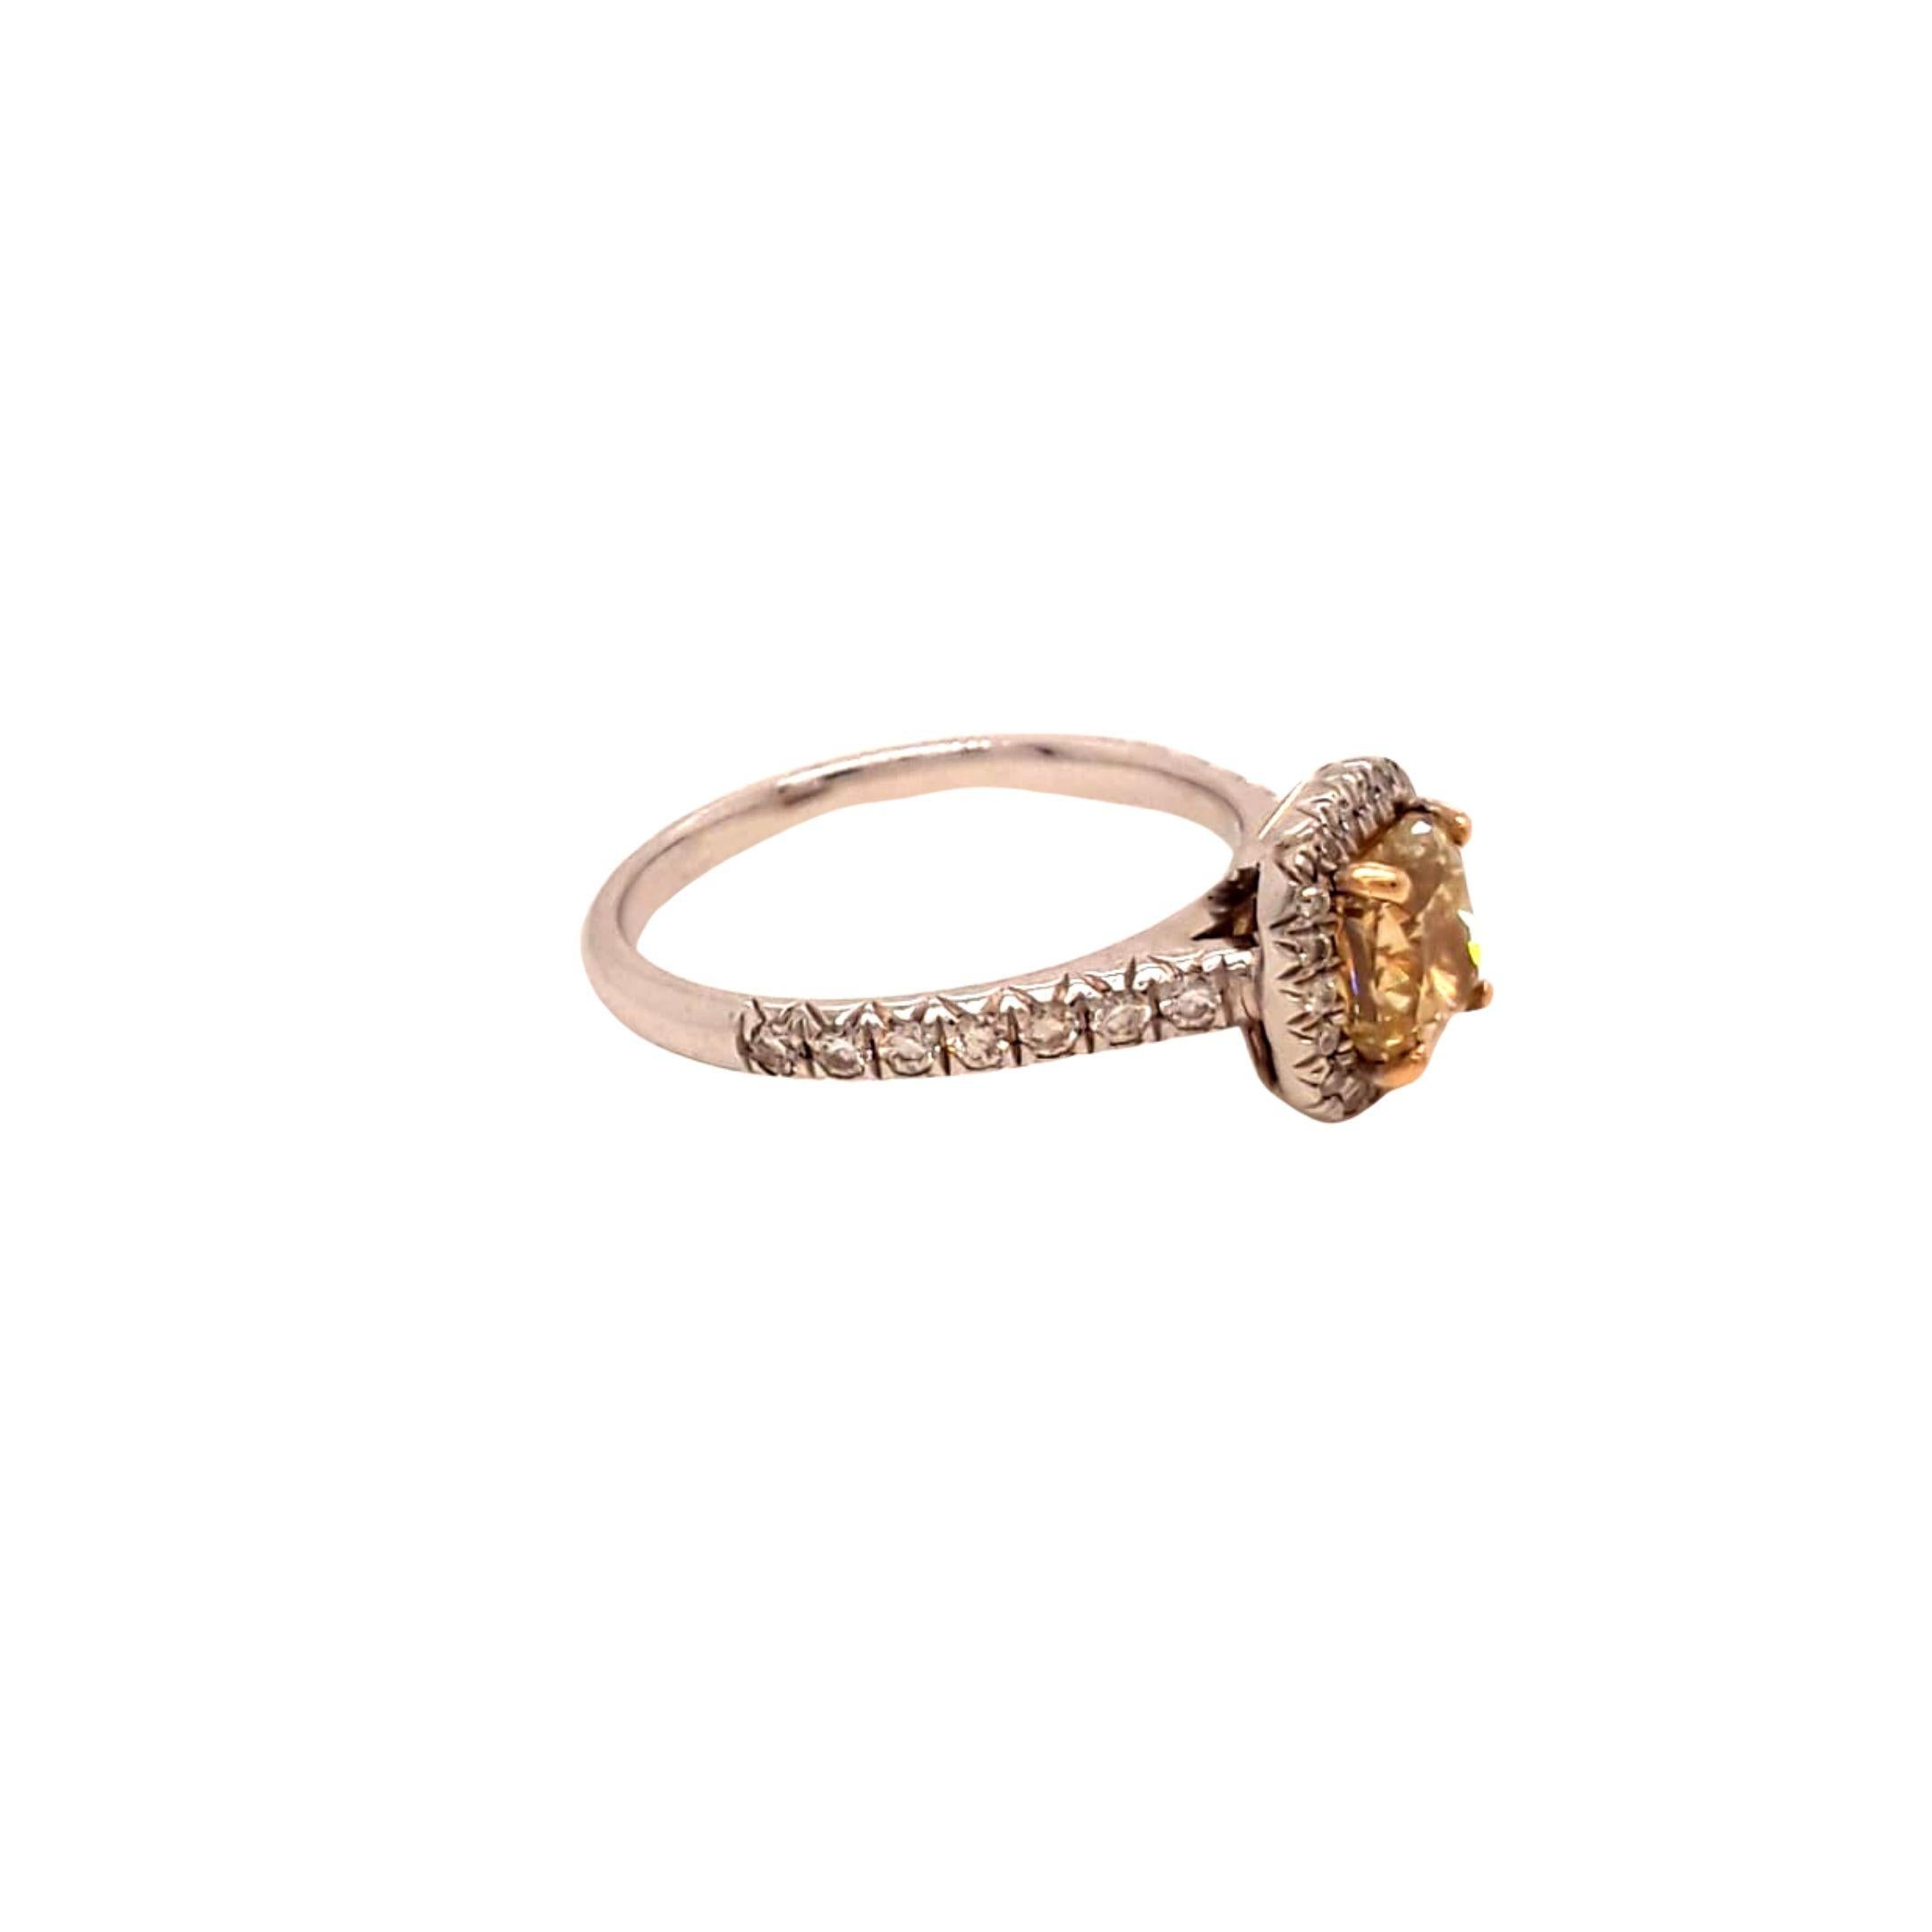 GIA Certified Yellow Cushion Diamond Ring. Total Diamond Weight: 1.36 Carats, Diamond Quantity: 38 diamonds (1 Fancy Yellow Cushion Diamond + 37 Brilliant Cut Diamonds), Diamond Clarity: VS1. Set on 18 karat white gold. Ring size 5.5.